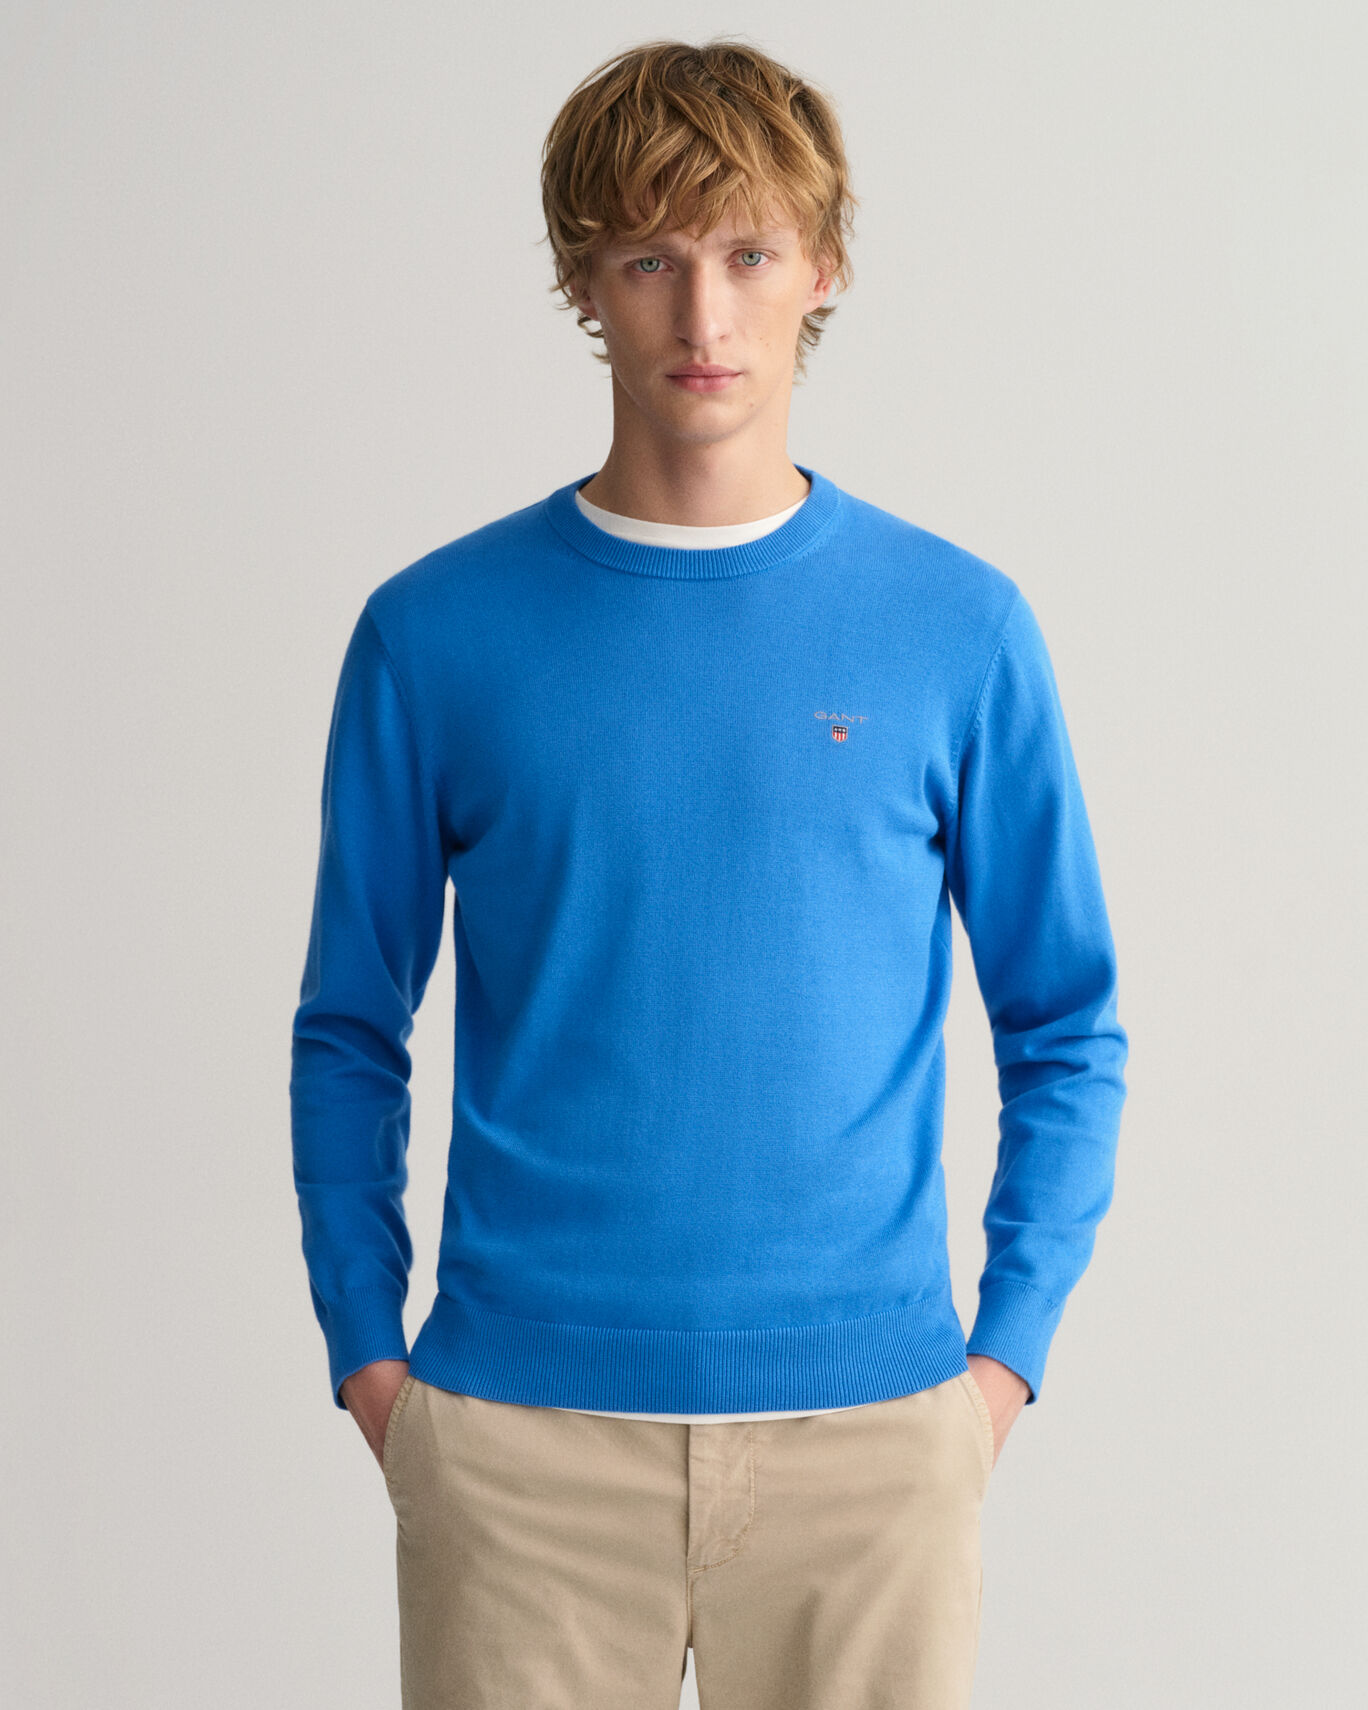 Gant Classic Cotton Crew Neck Sweater - Day Blue - Corcoran's Menswear